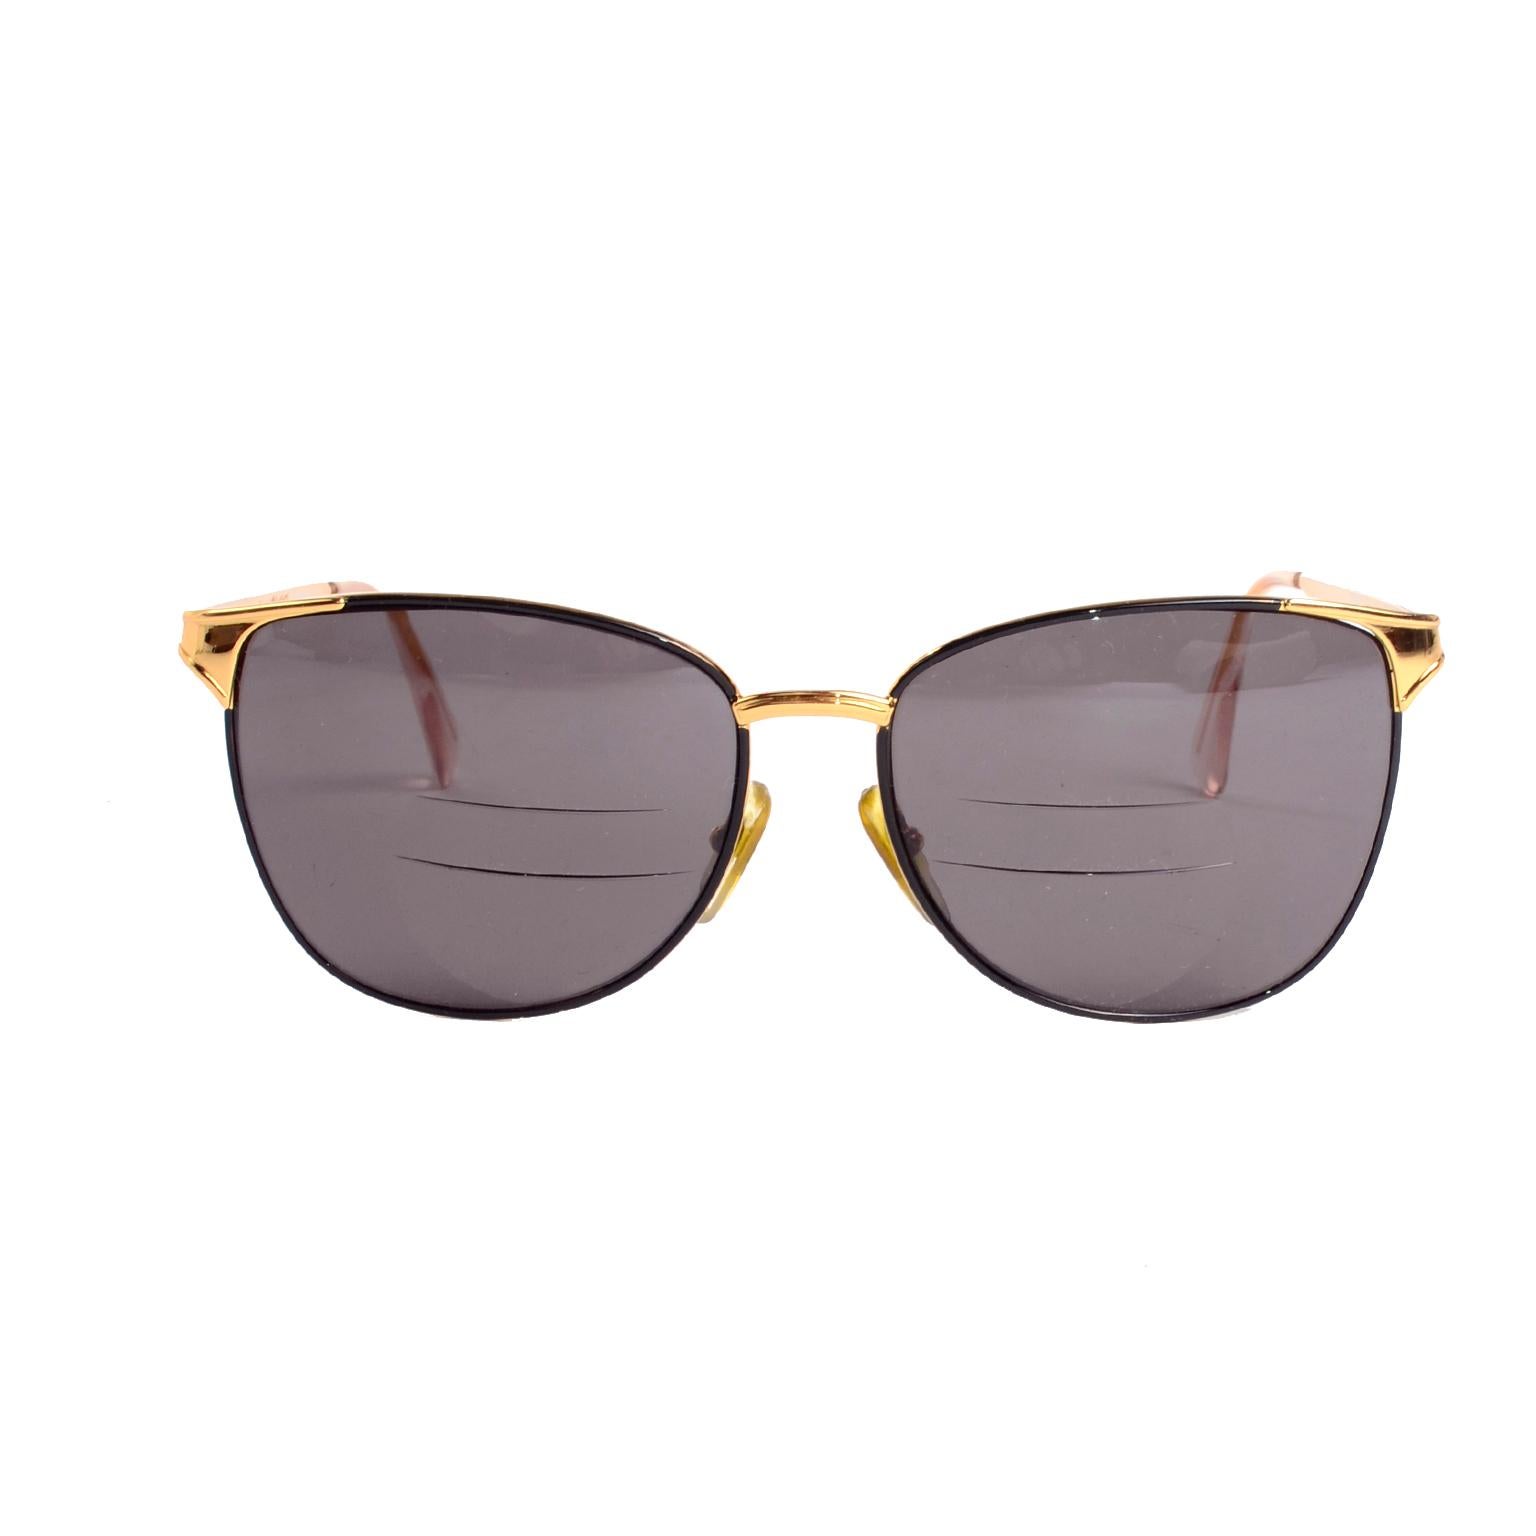 Gray Laura Biagiotti Gold Rim Vintage Sunglasses Frames